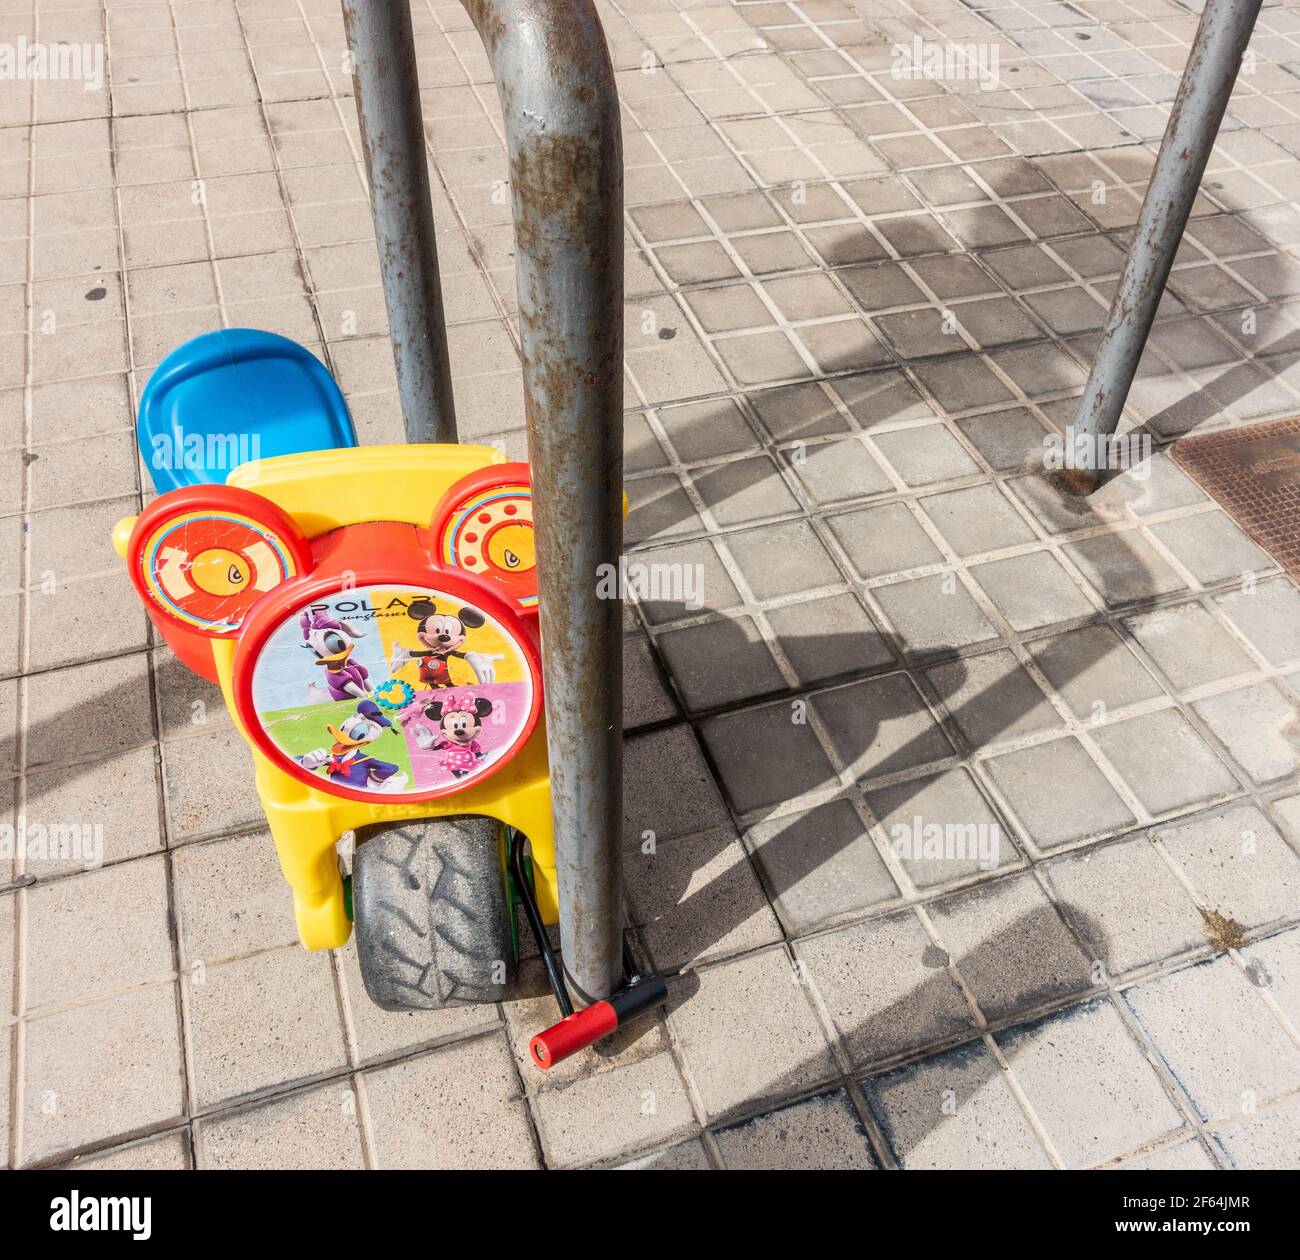 Kinder Kunststoff Fahrrad mit schweren U-Lock gesperrt Fahrradparkstange vor der Junior-Schule Stockfoto